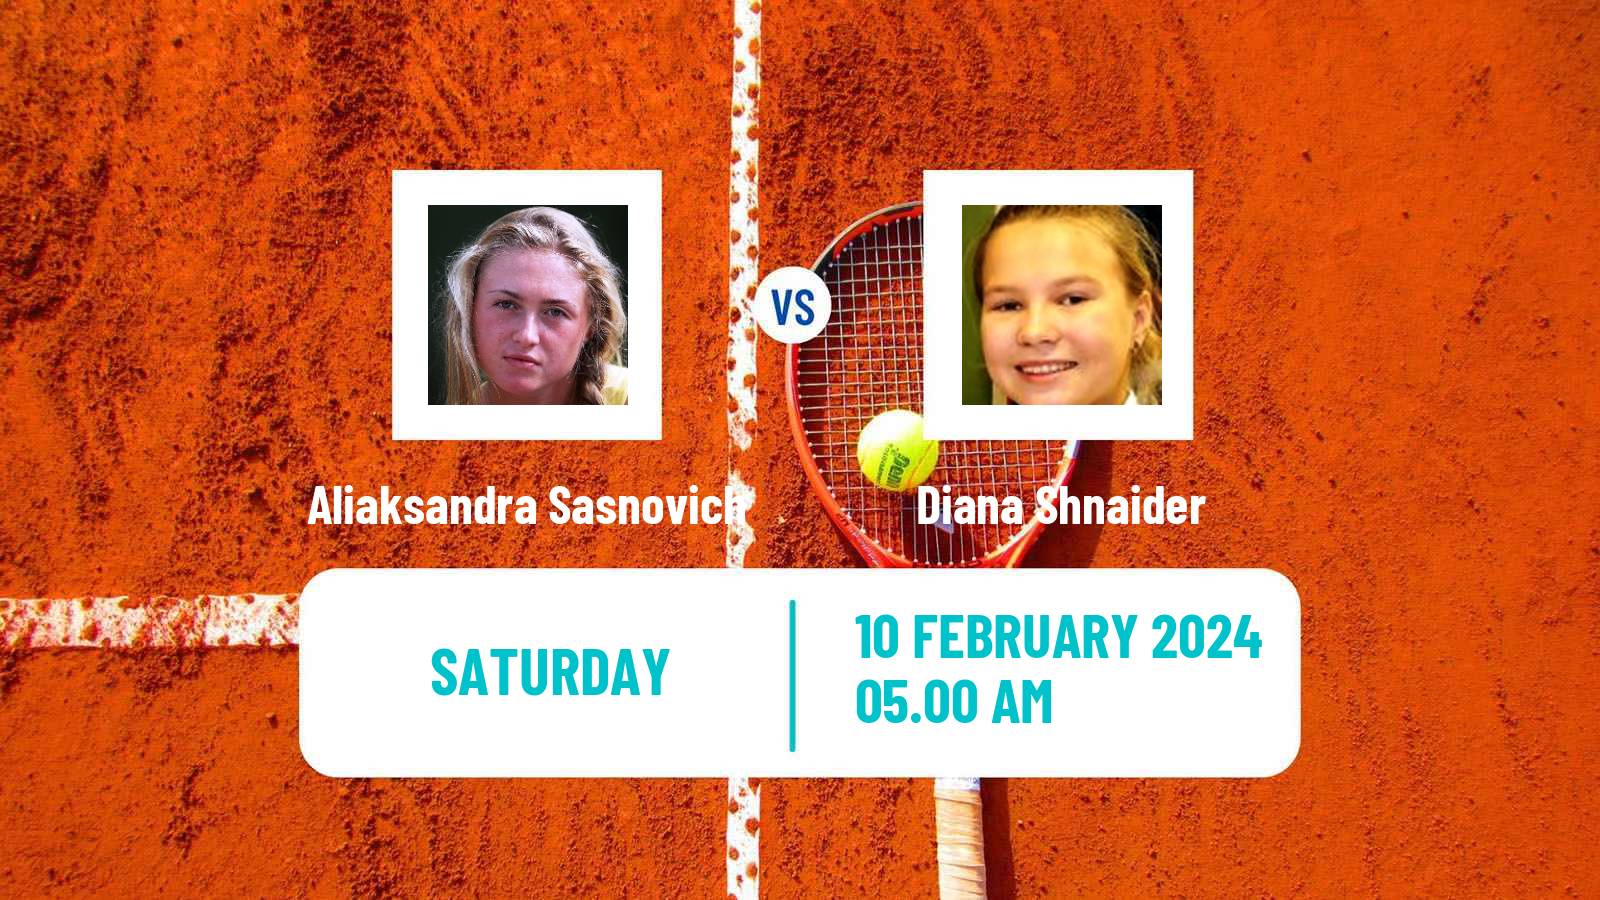 Tennis WTA Doha Aliaksandra Sasnovich - Diana Shnaider